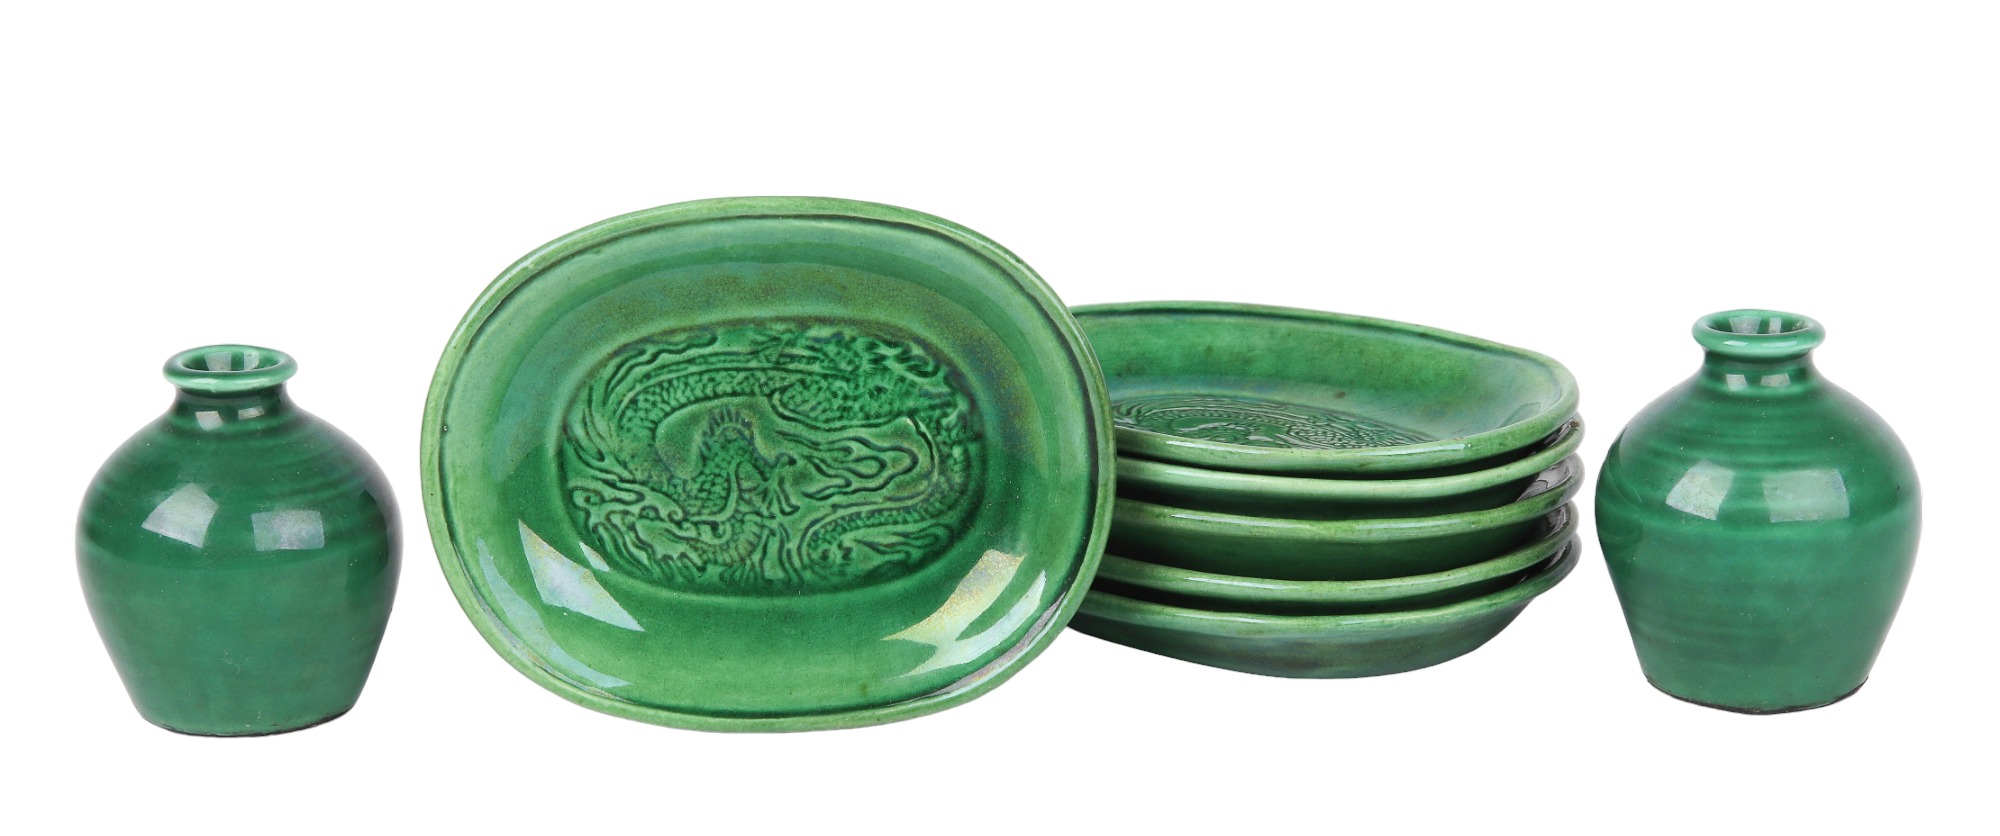  8 Pcs Asian porcelain dark green 3ca714